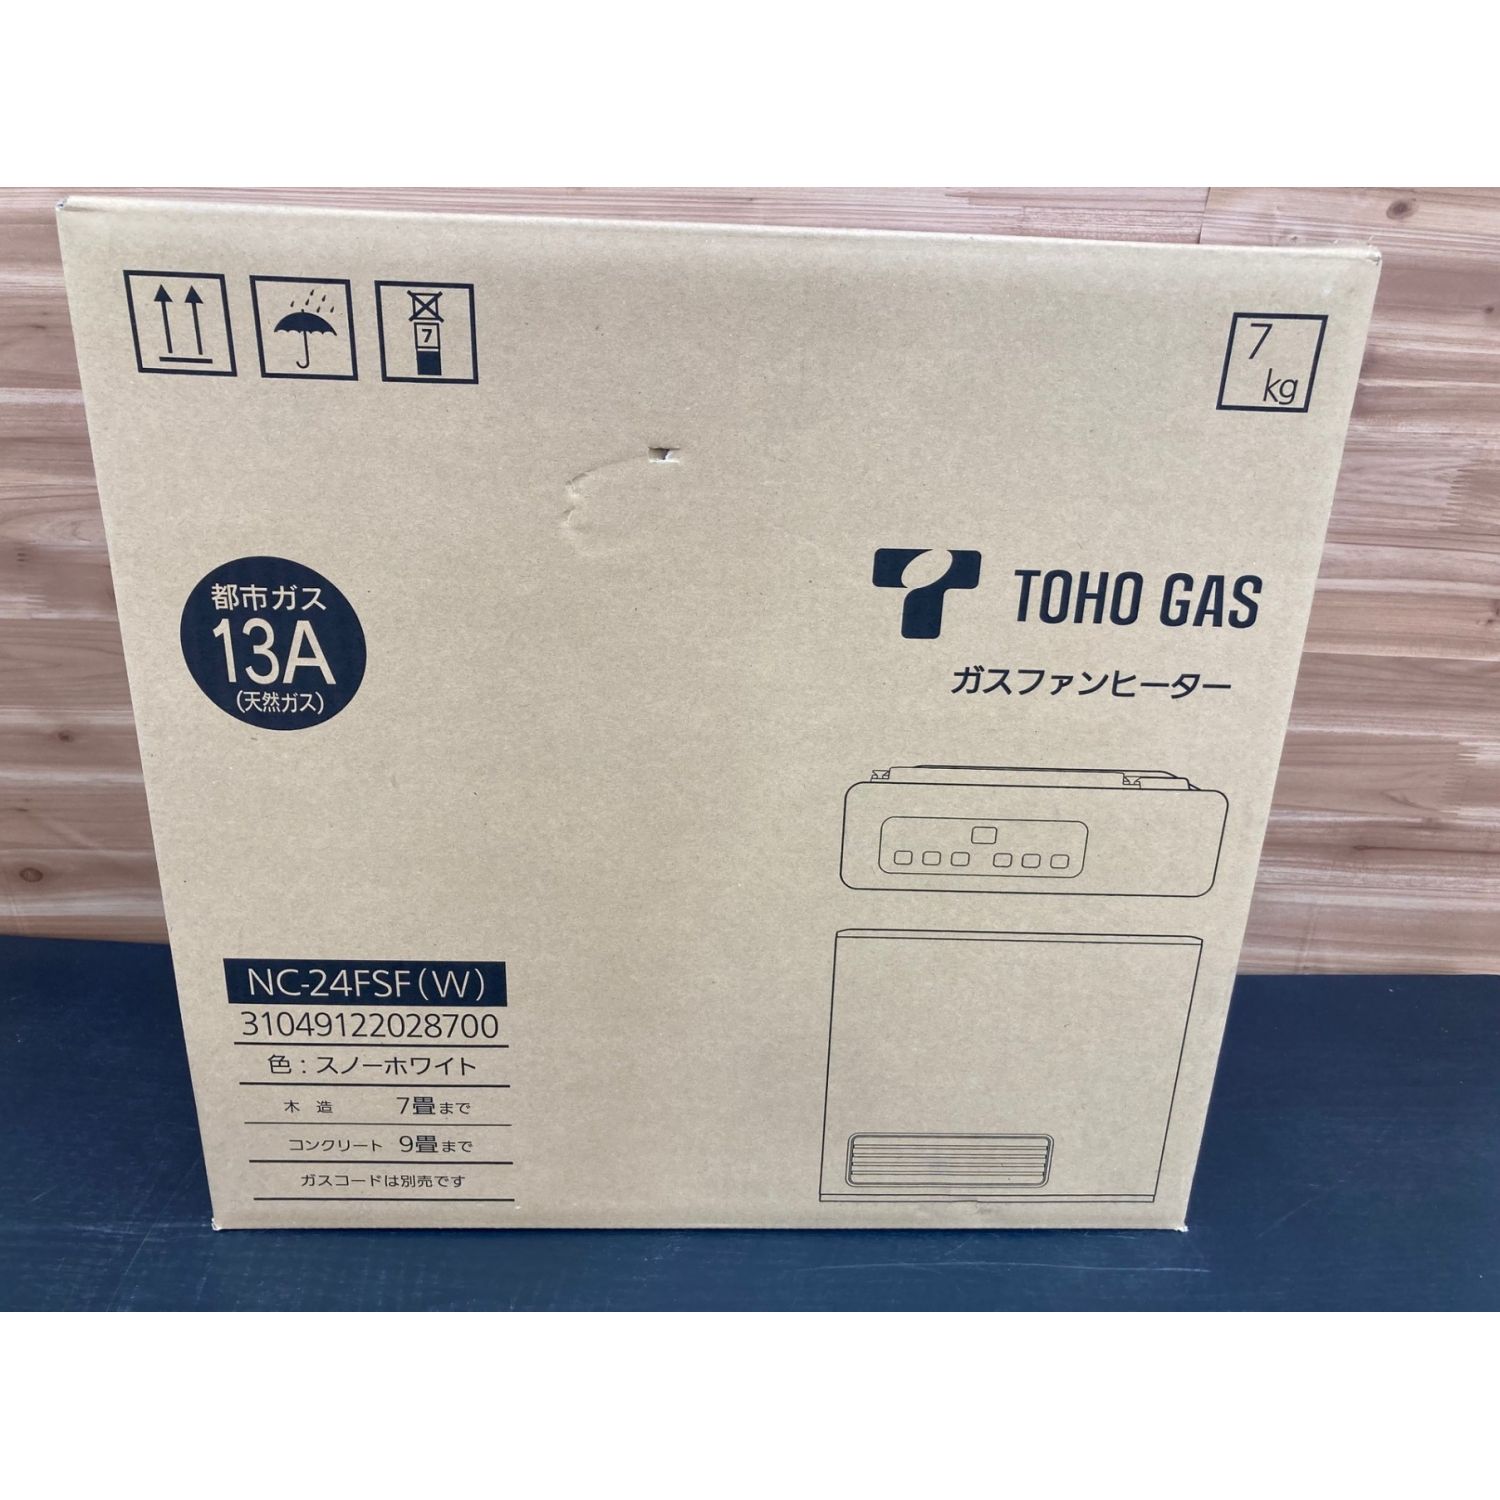 TOHO GAS ガスファンヒーター NC-24FSF(W)